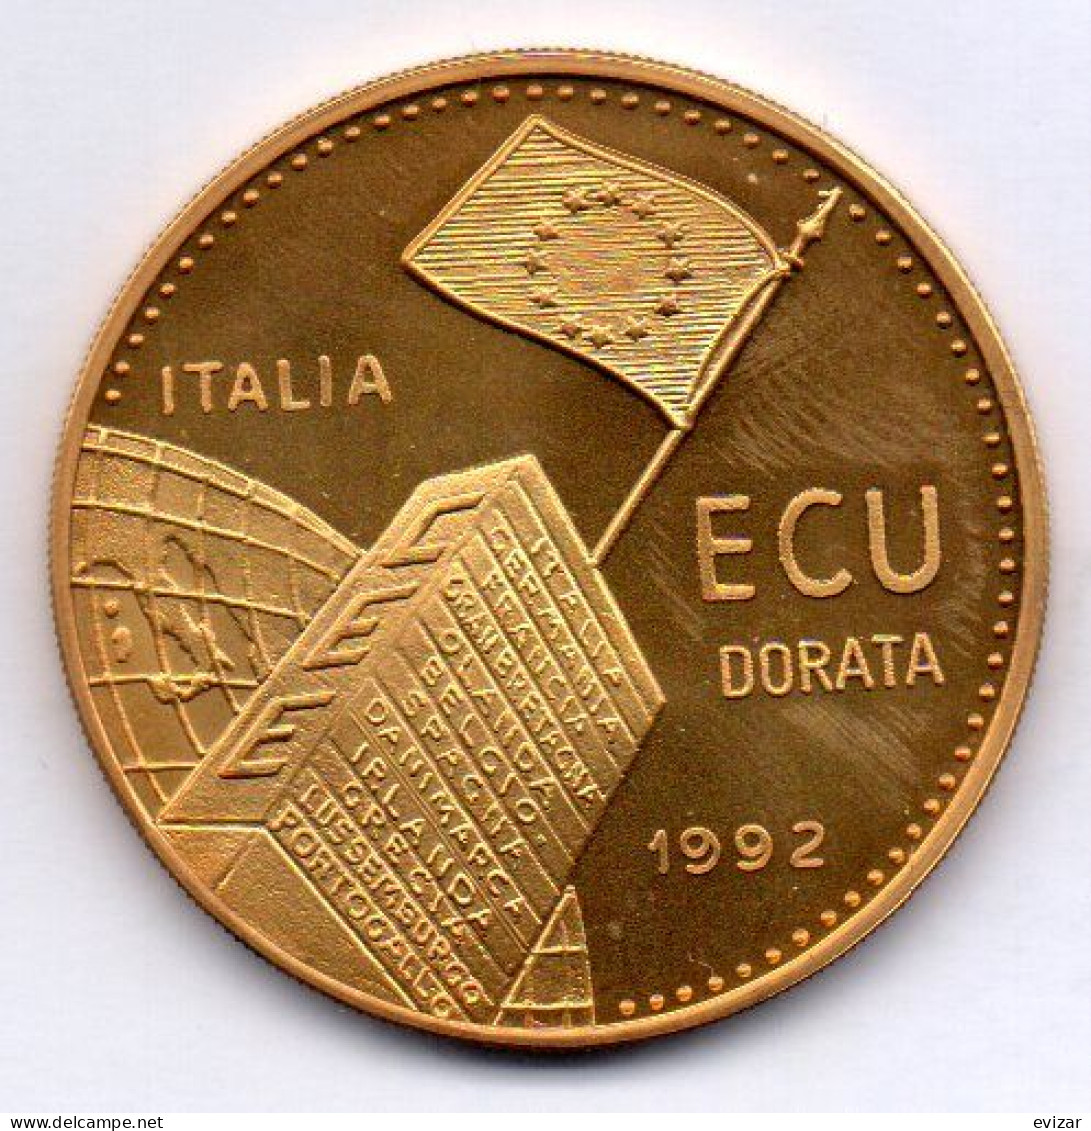 ITALIA, 1 Ecu, Copper-Nickel Gold Plated, Year 1992, # X194 - 1 000 Lire